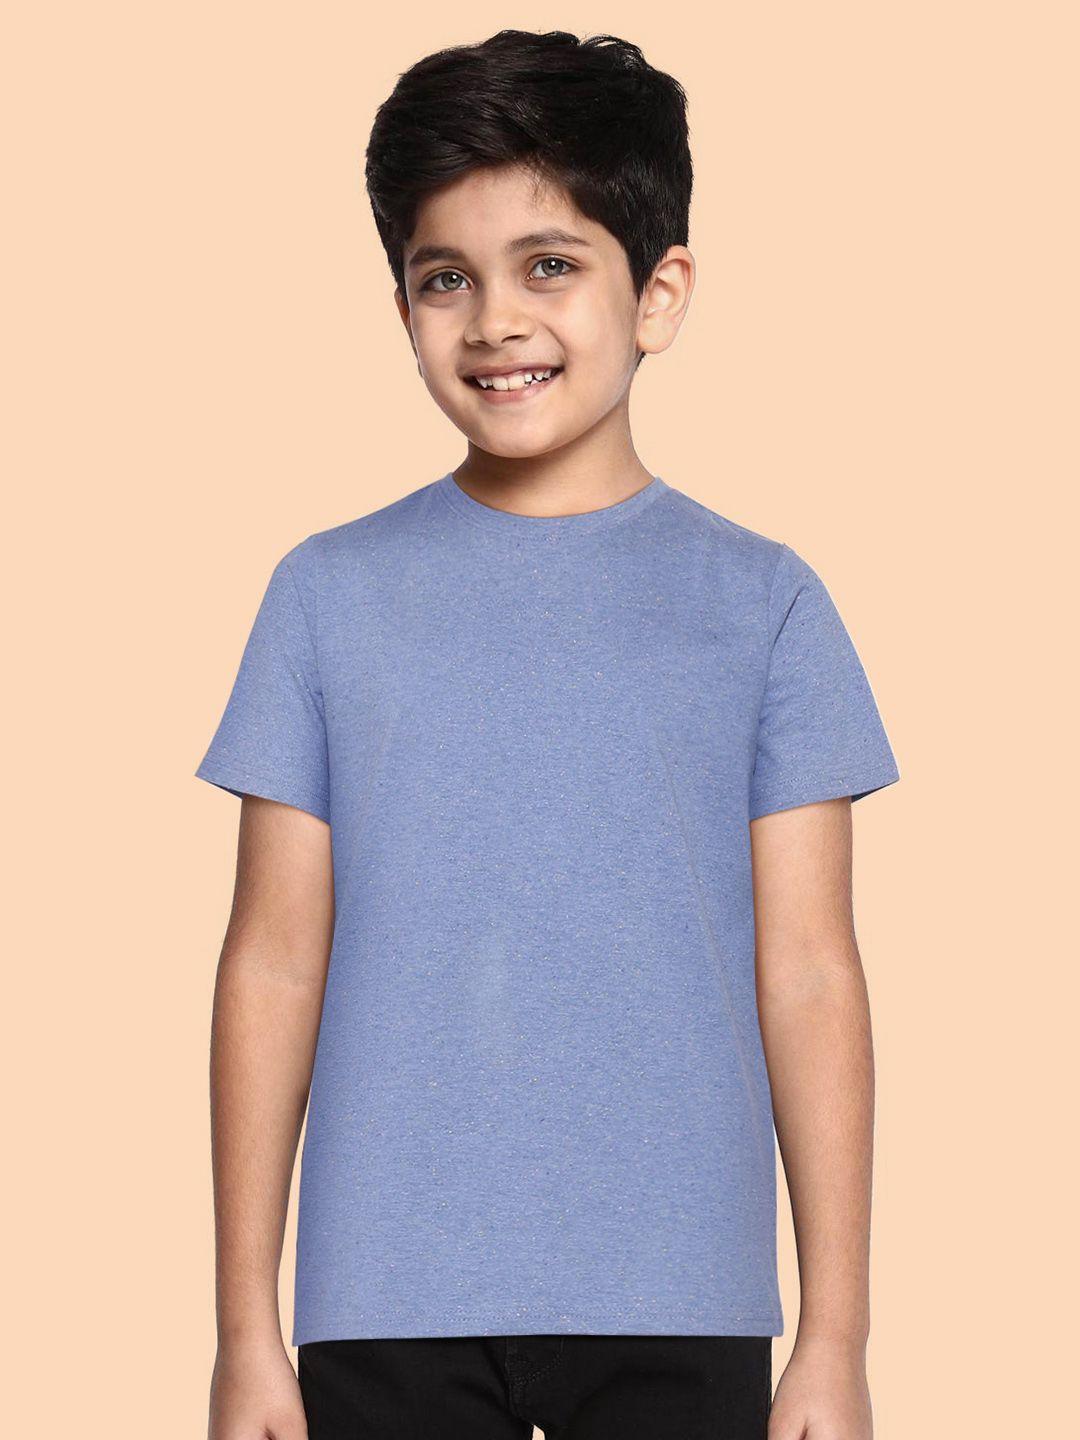 hrx by hrithik roshan lifestyle u-17 boys yellow bio-wash brand carrier t-shirts